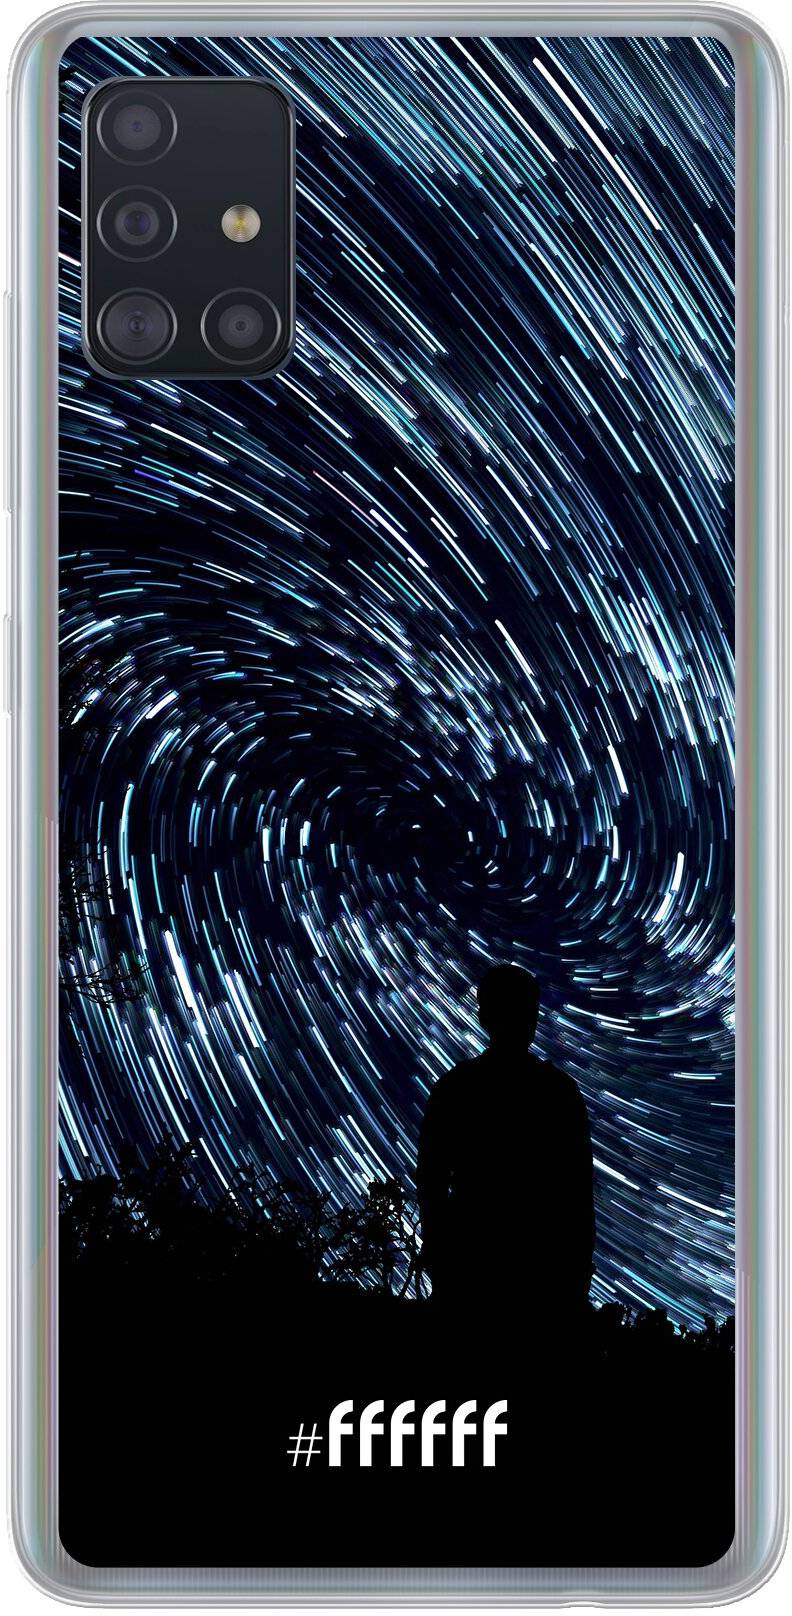 Starry Circles Galaxy A51